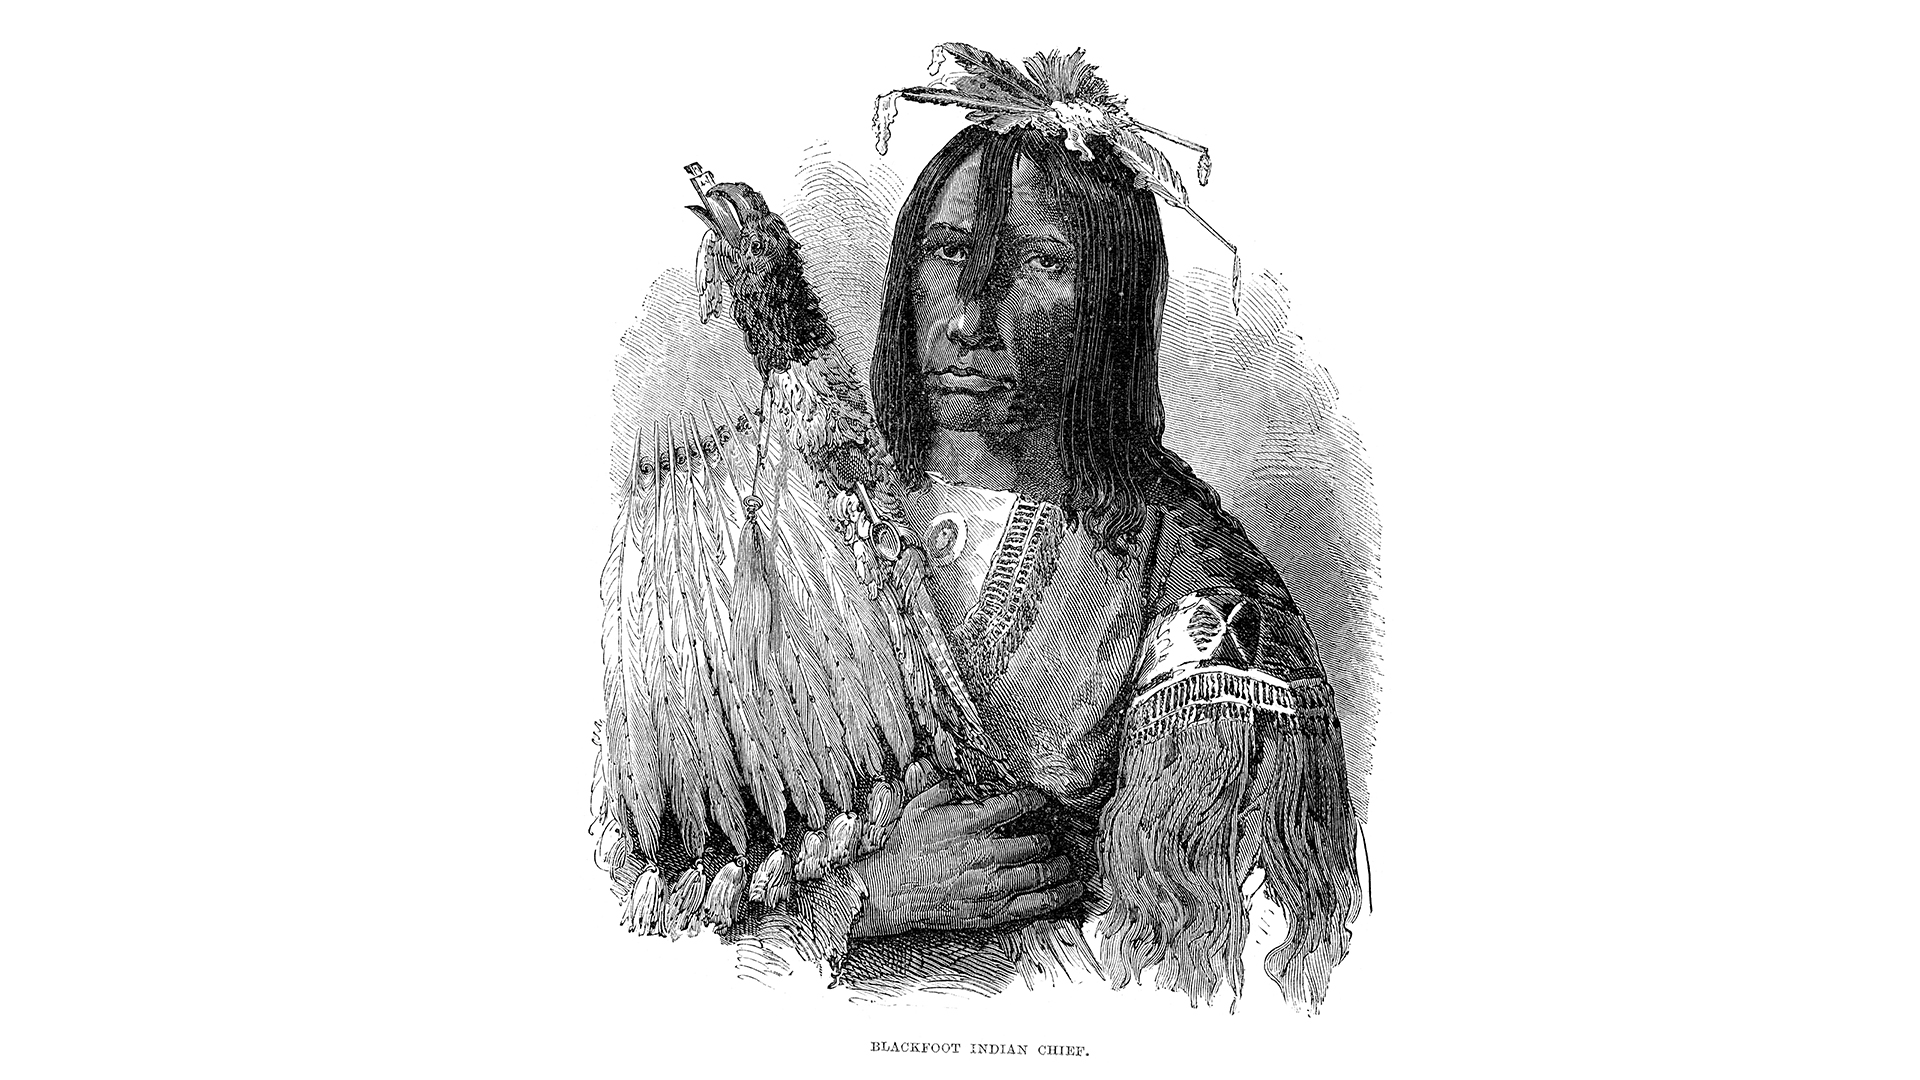 Vintage engraving showing a Blackfoot (NiitsÃ­tapi) Native American Chief, 1873.